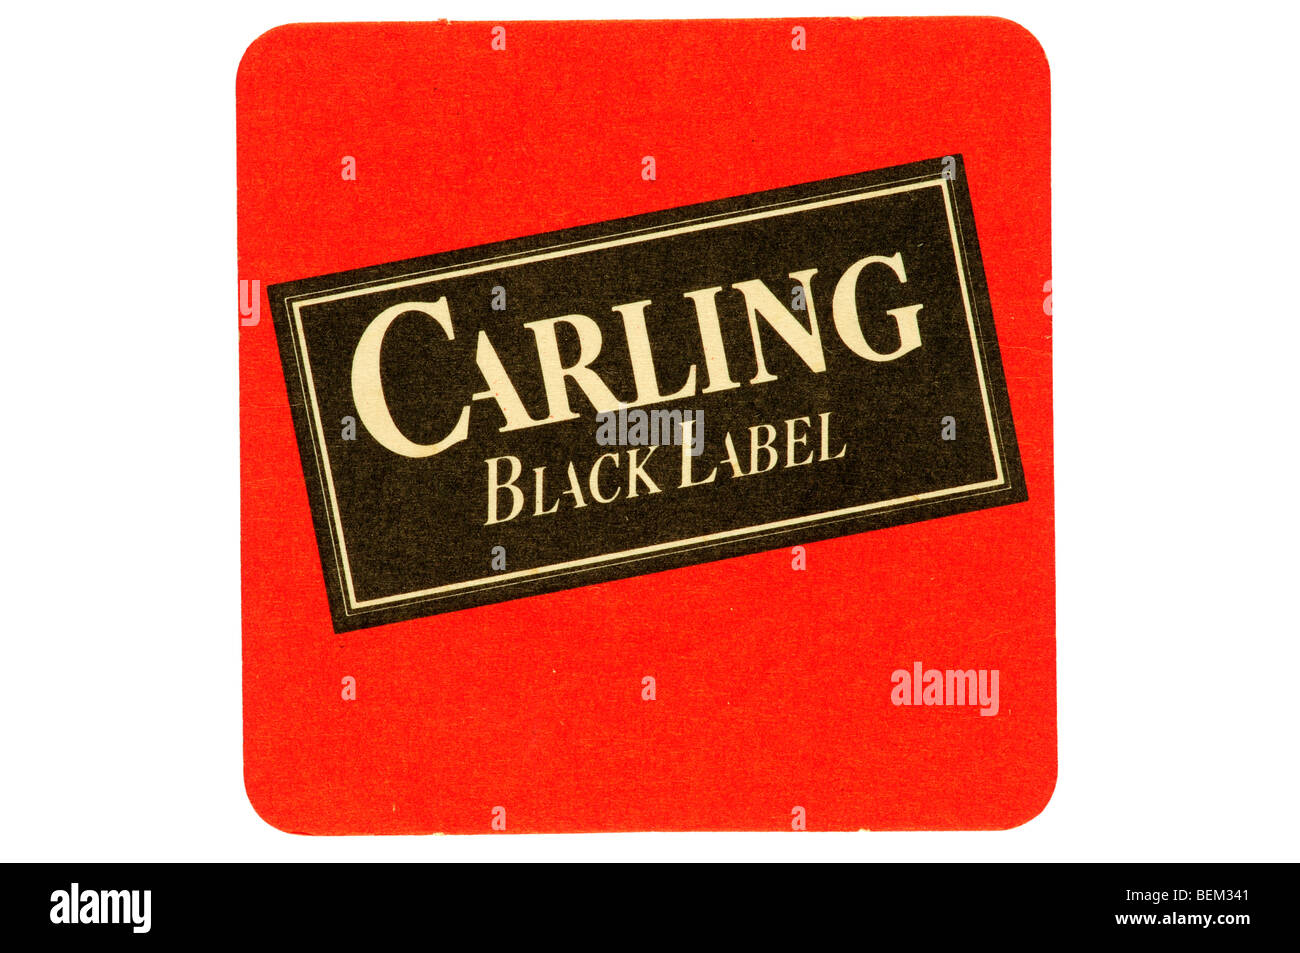 carling black label Stock Photo - Alamy